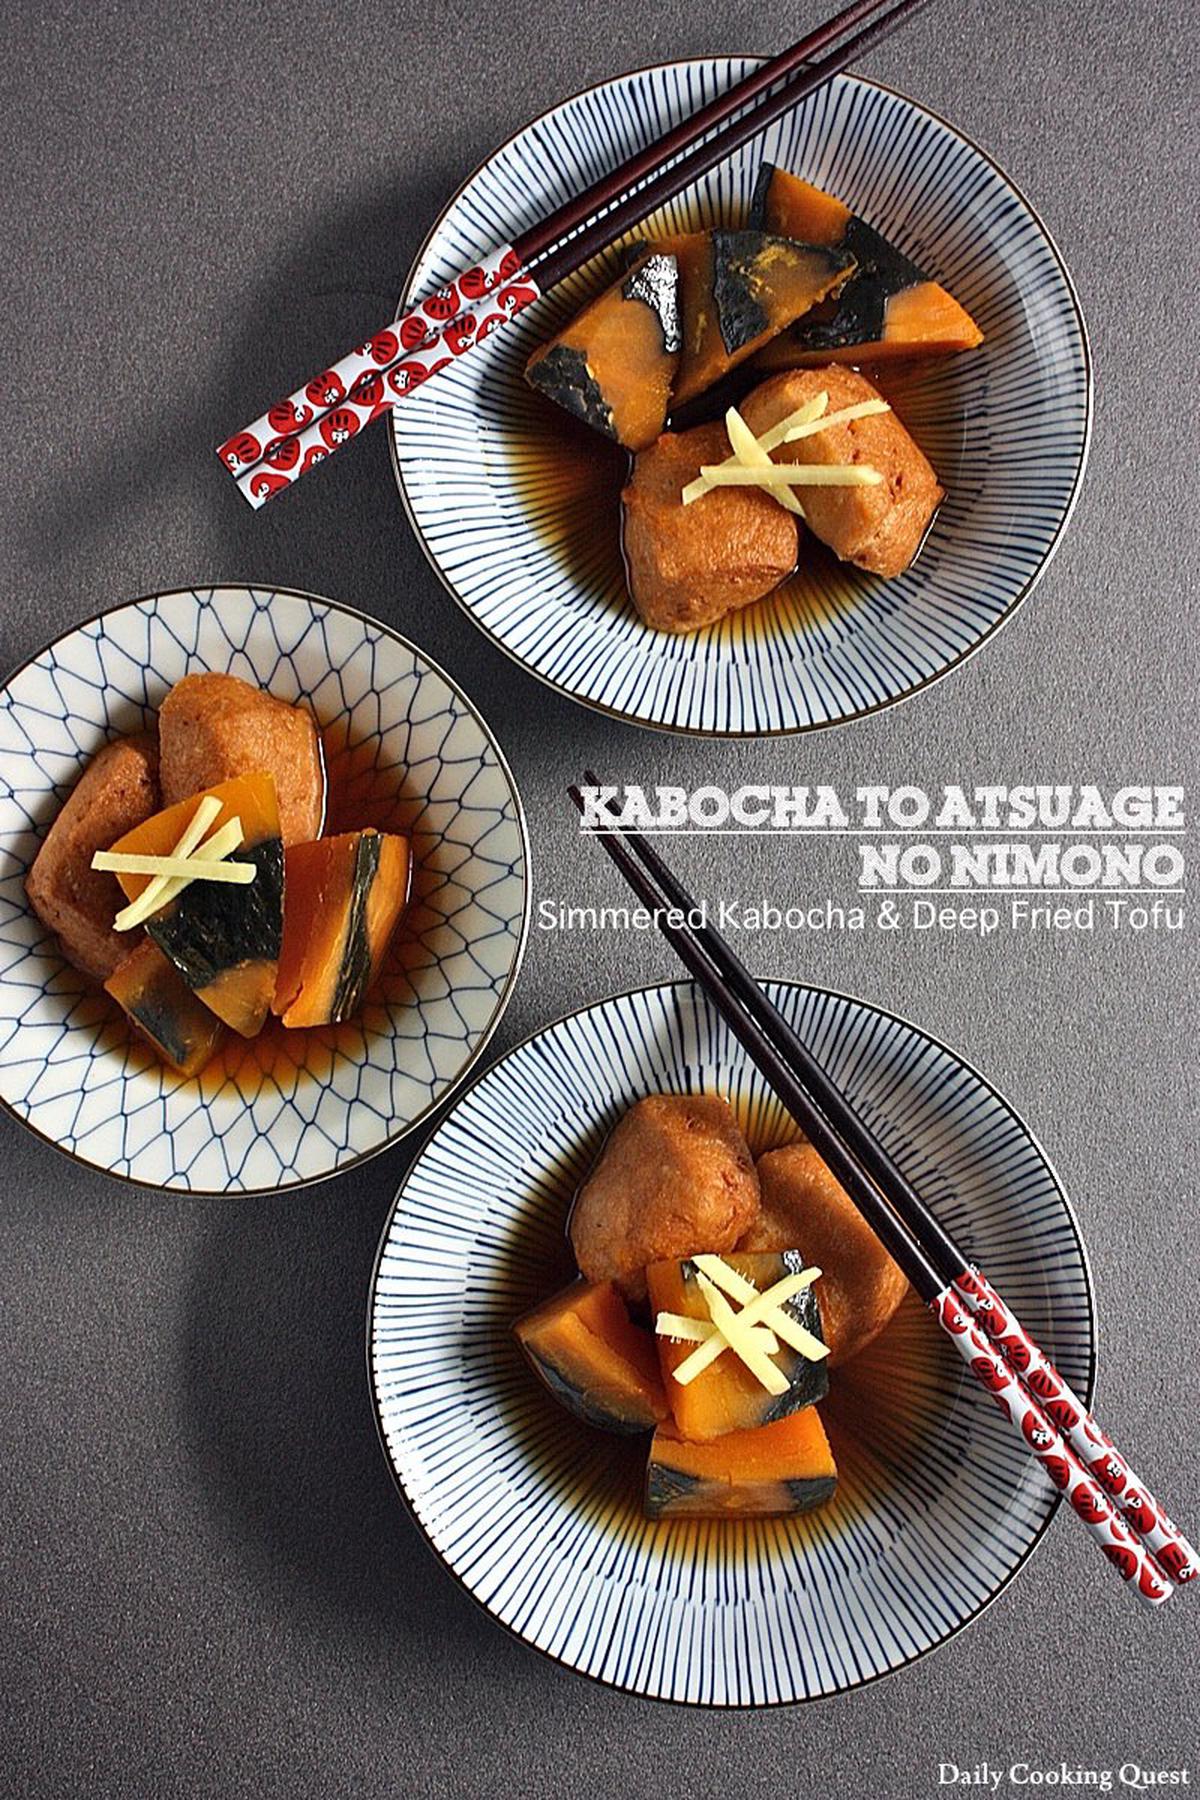 Kabocha to Atsuage no Nimono - Simmered Kabocha and Deep Fried Tofu